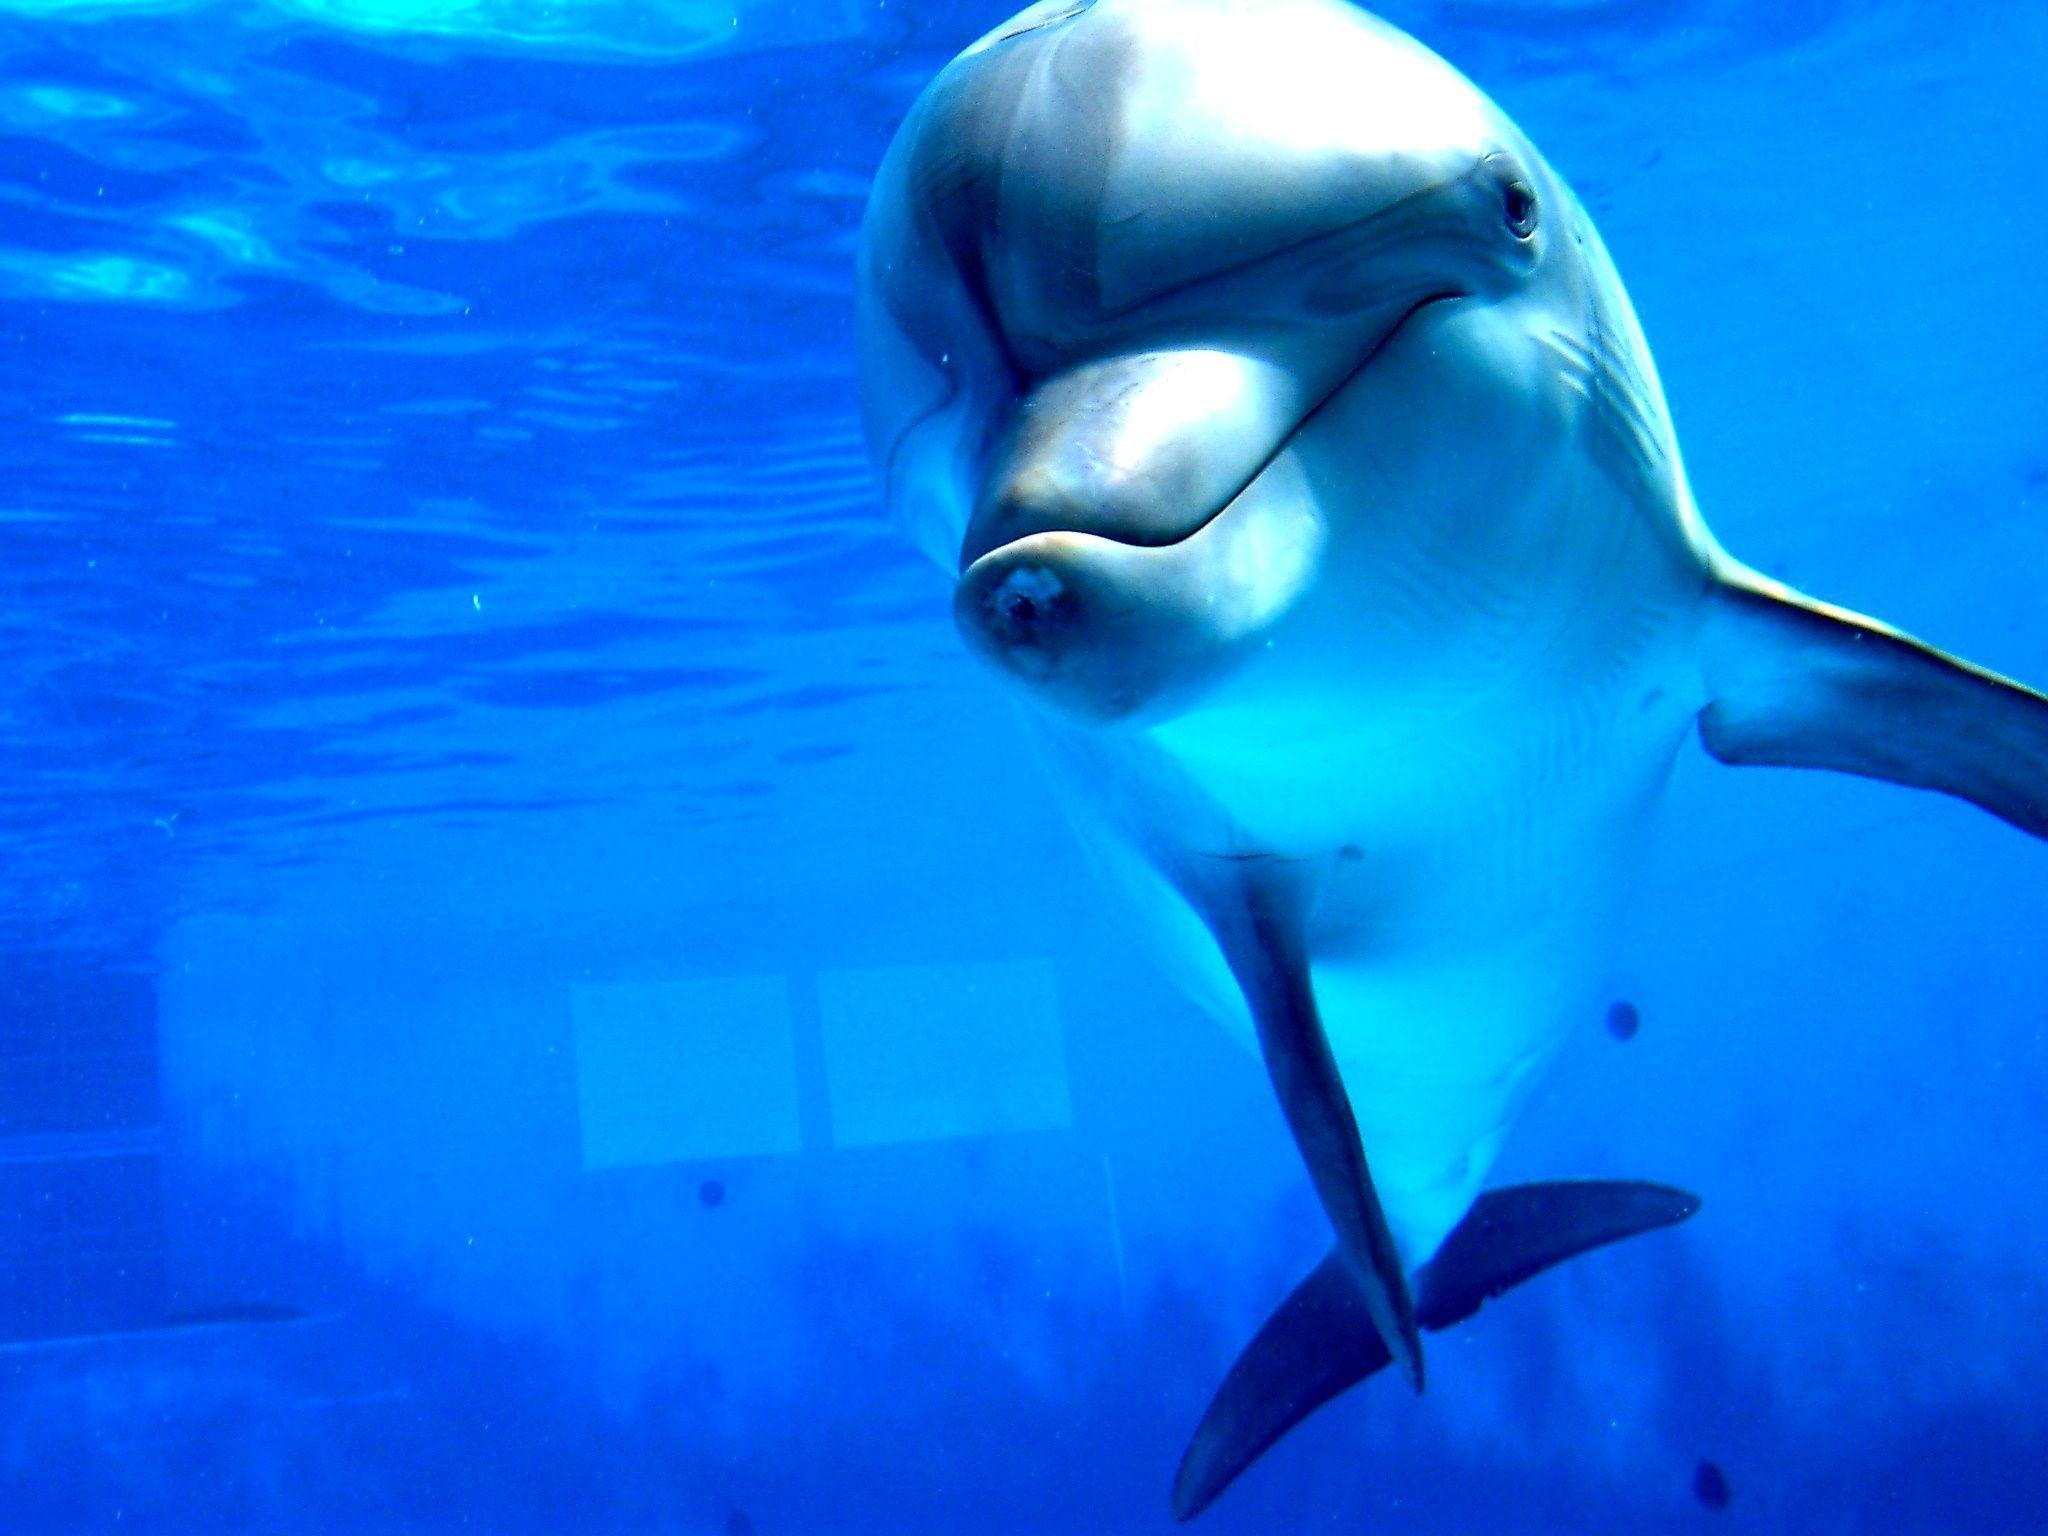 Dolphin Wallpaper HD. fbpapa